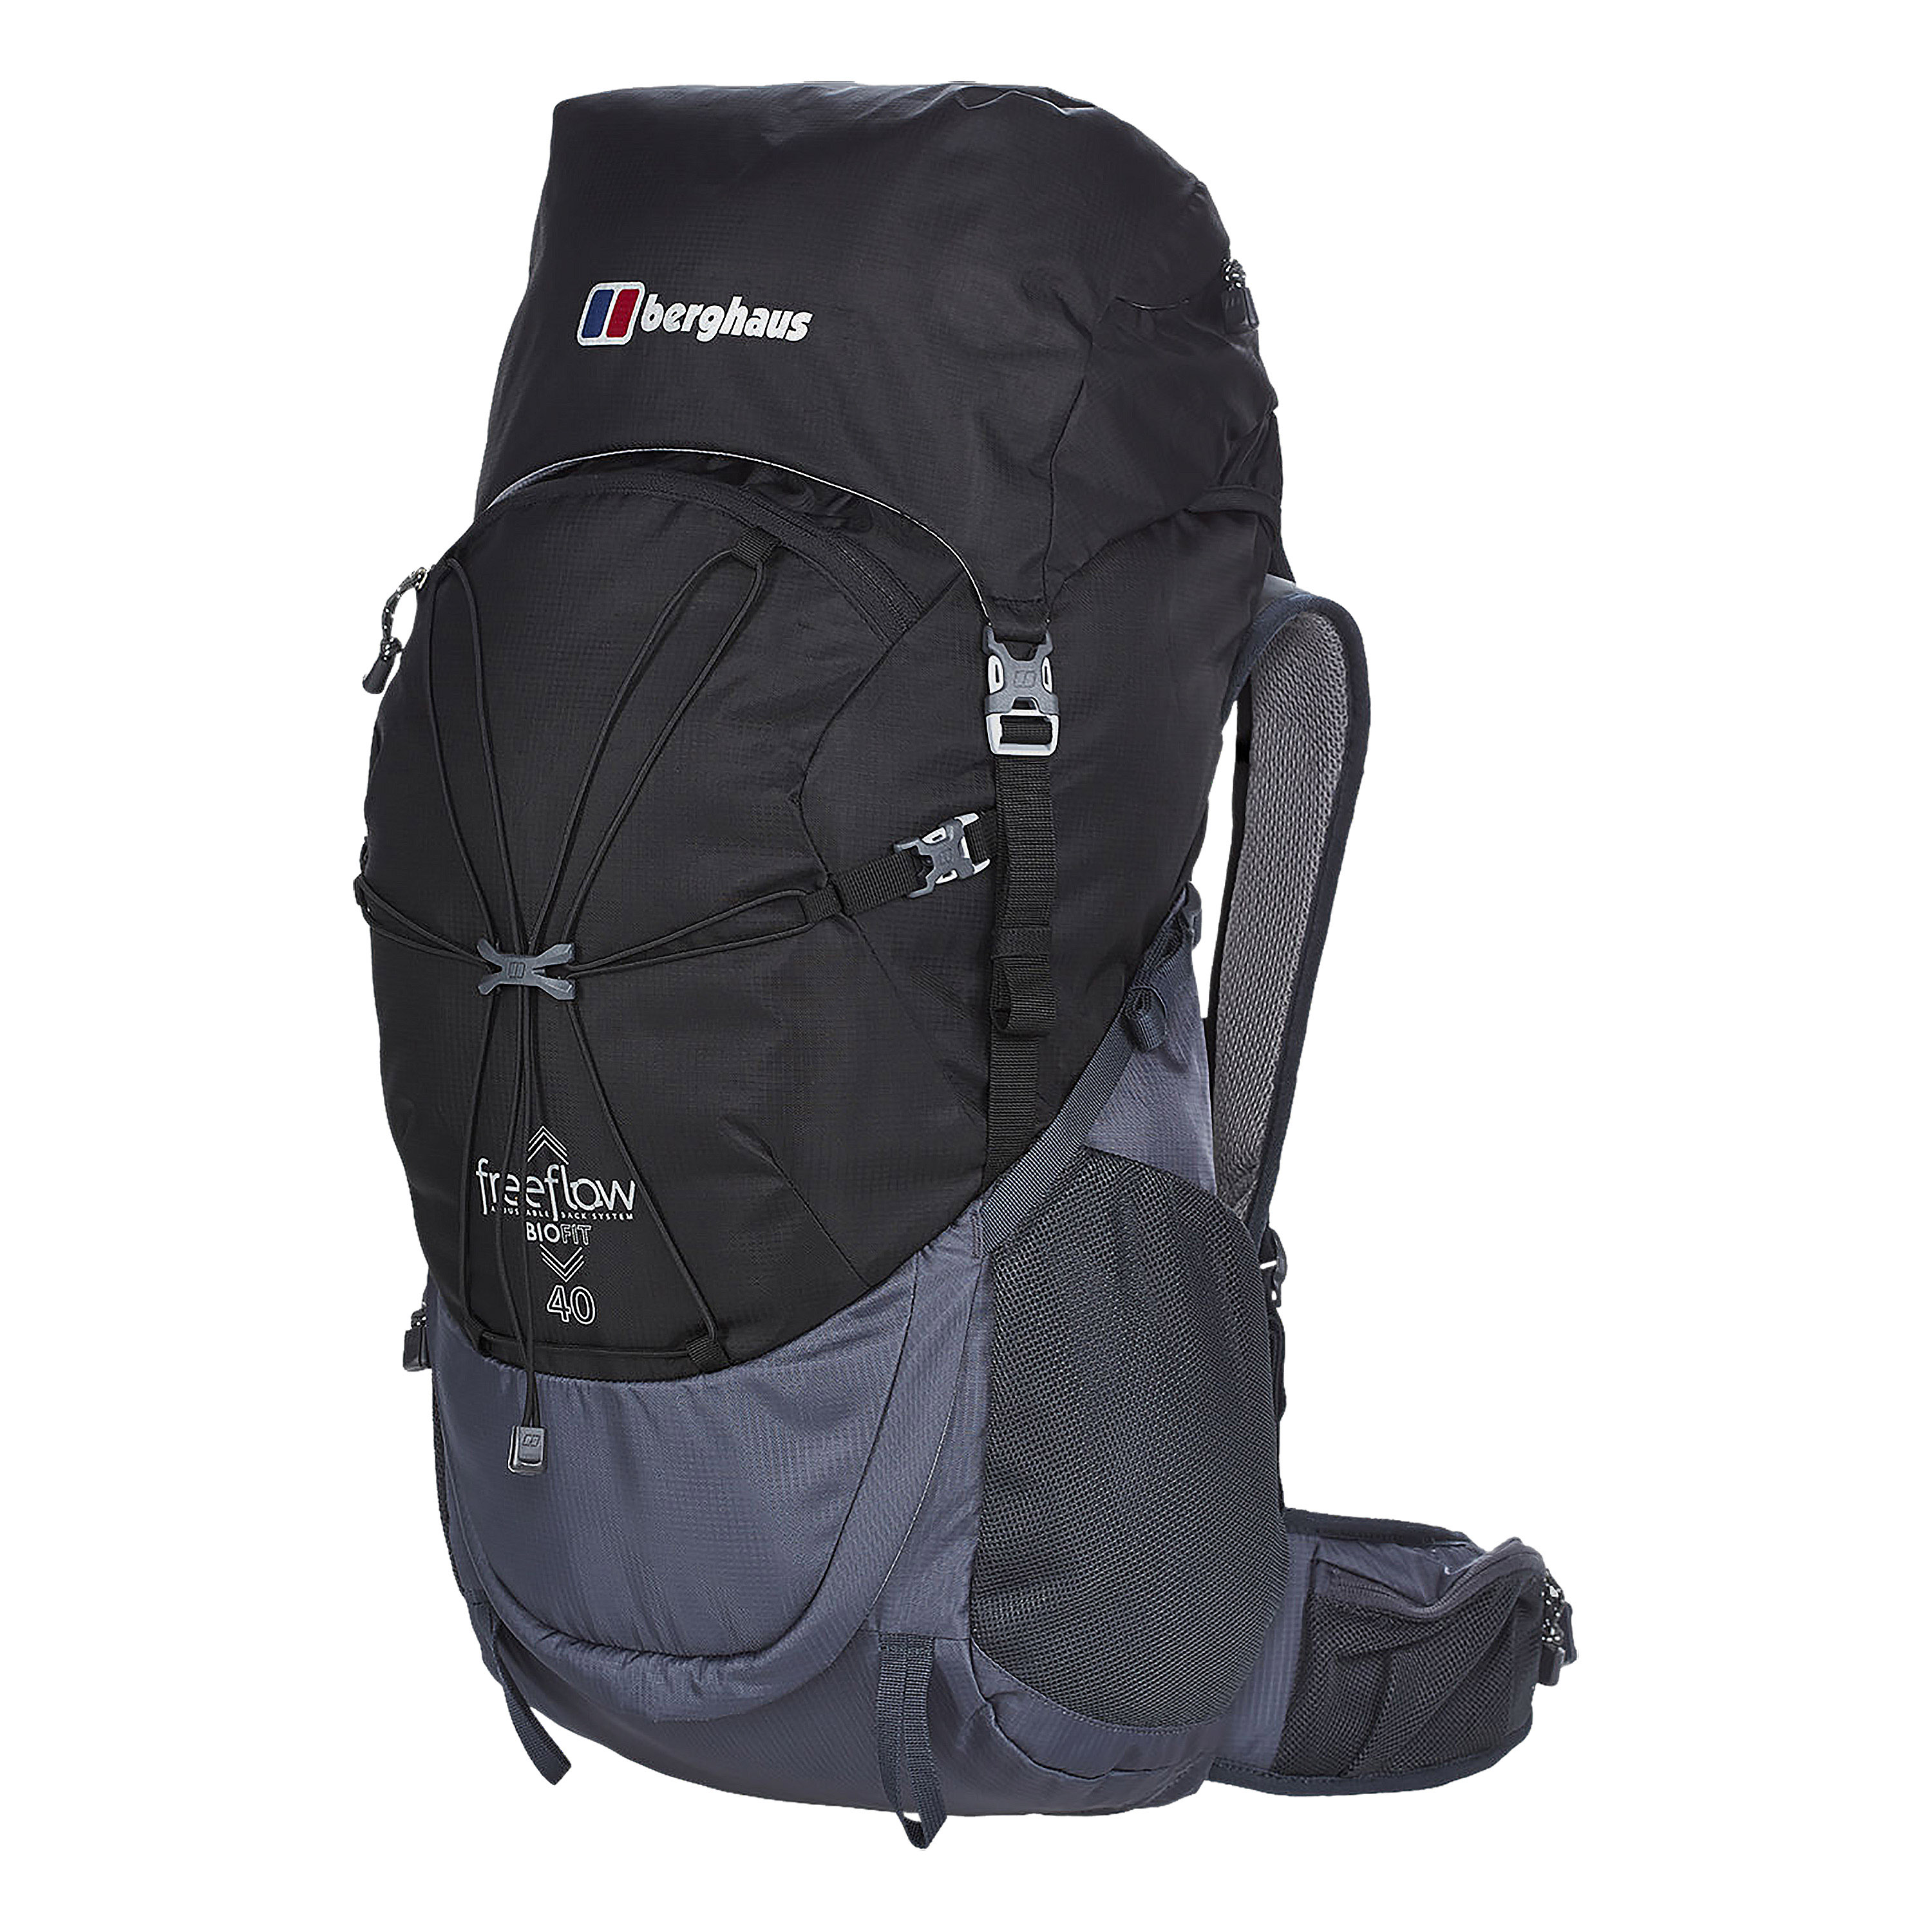 Berghaus Backpack Freeflow II 40 black